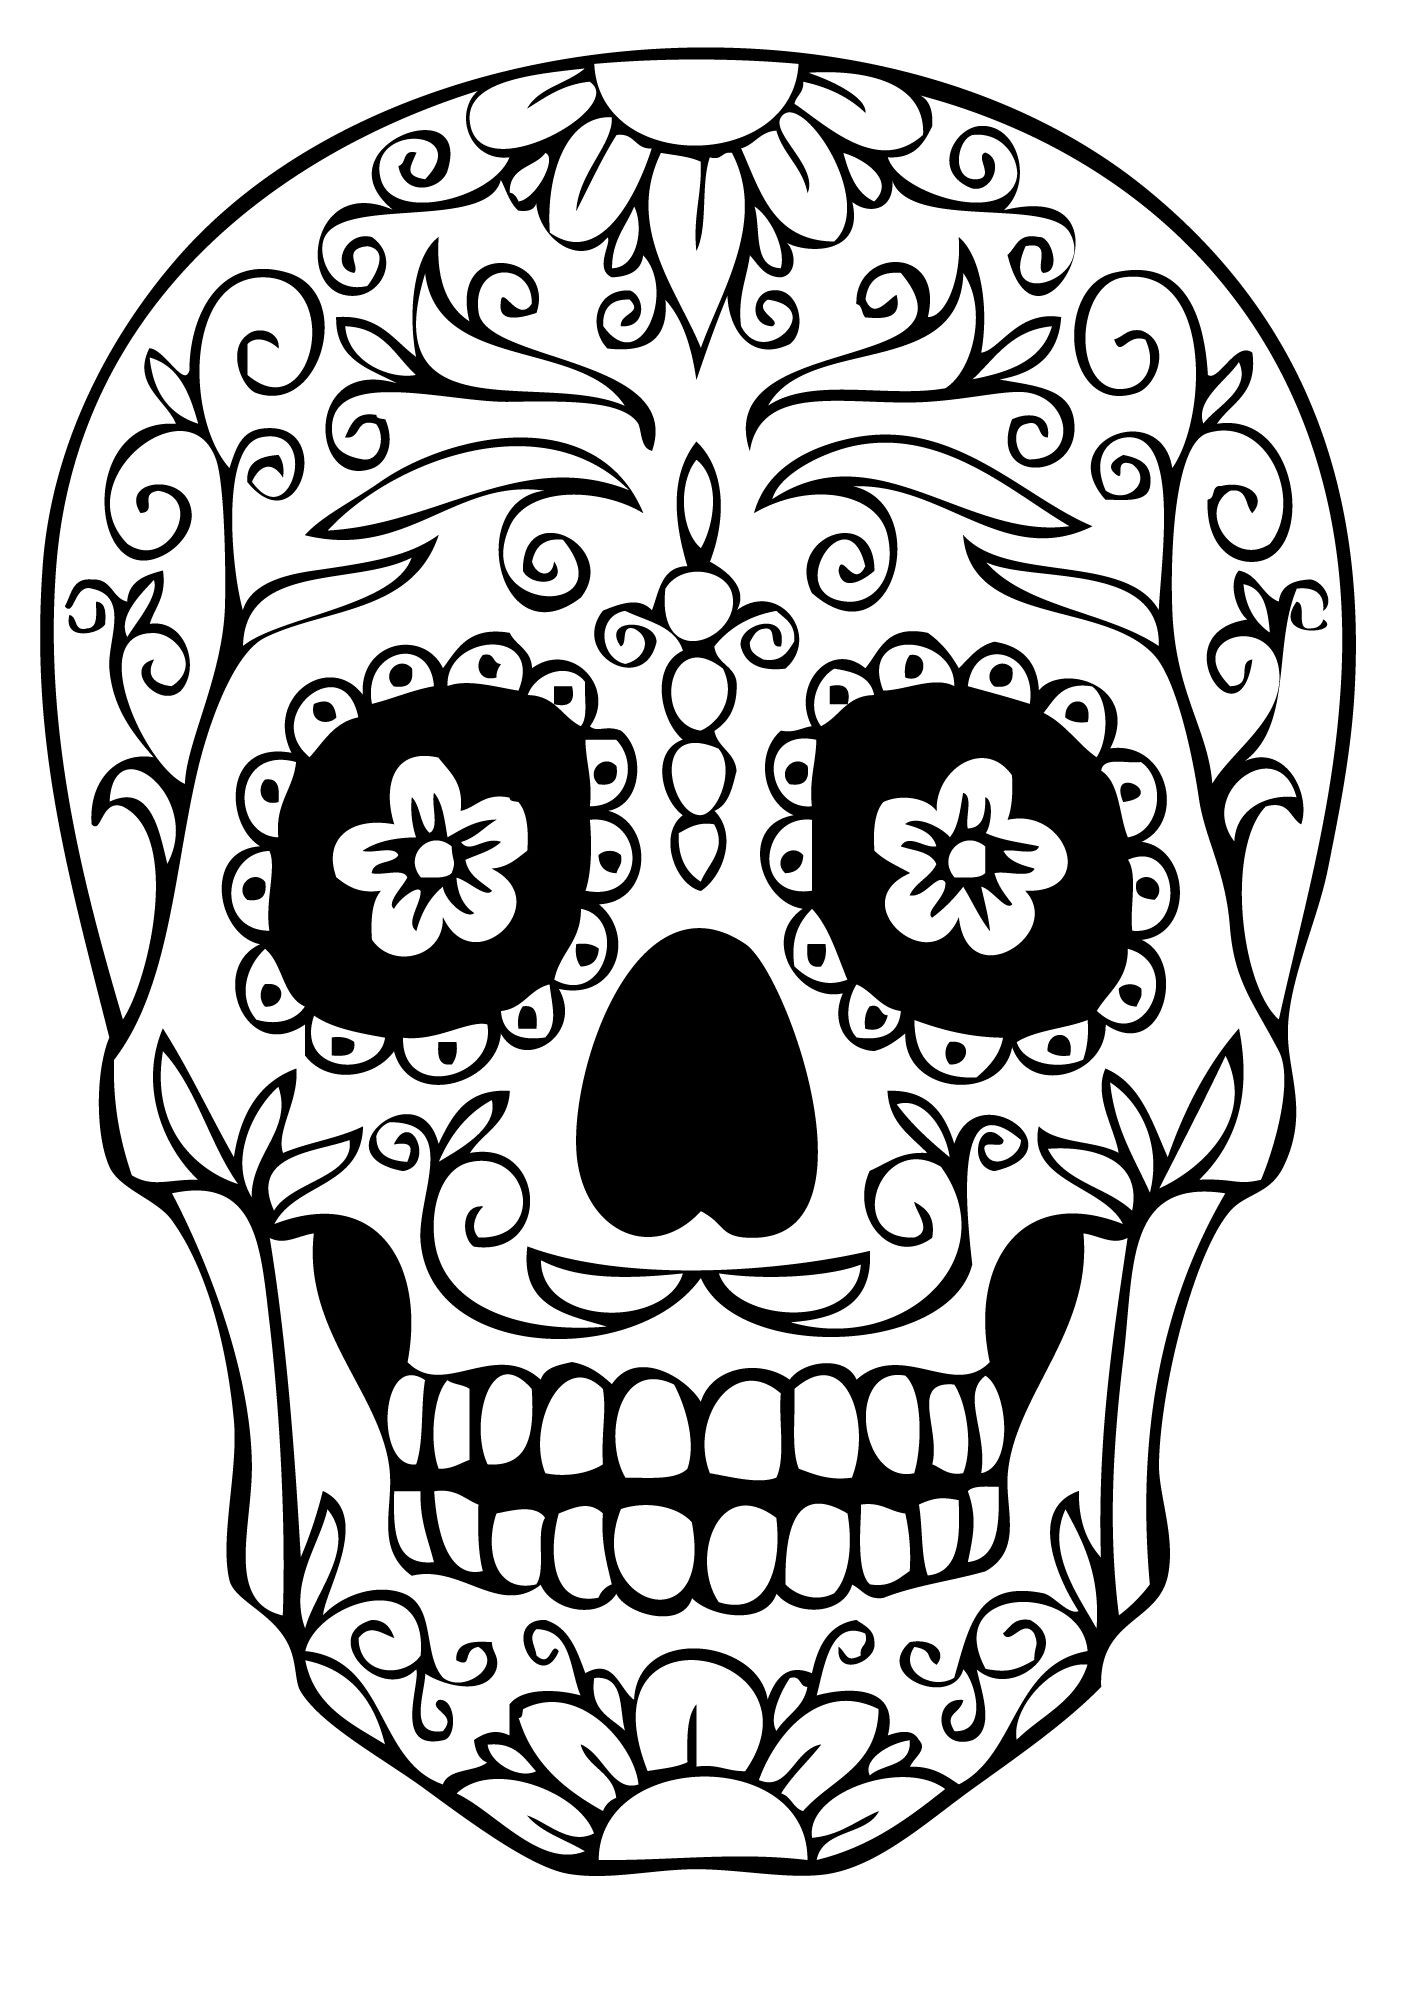 Skull Coloring Pages For Kids
 Sugar Skull Coloring Pages Best Coloring Pages For Kids